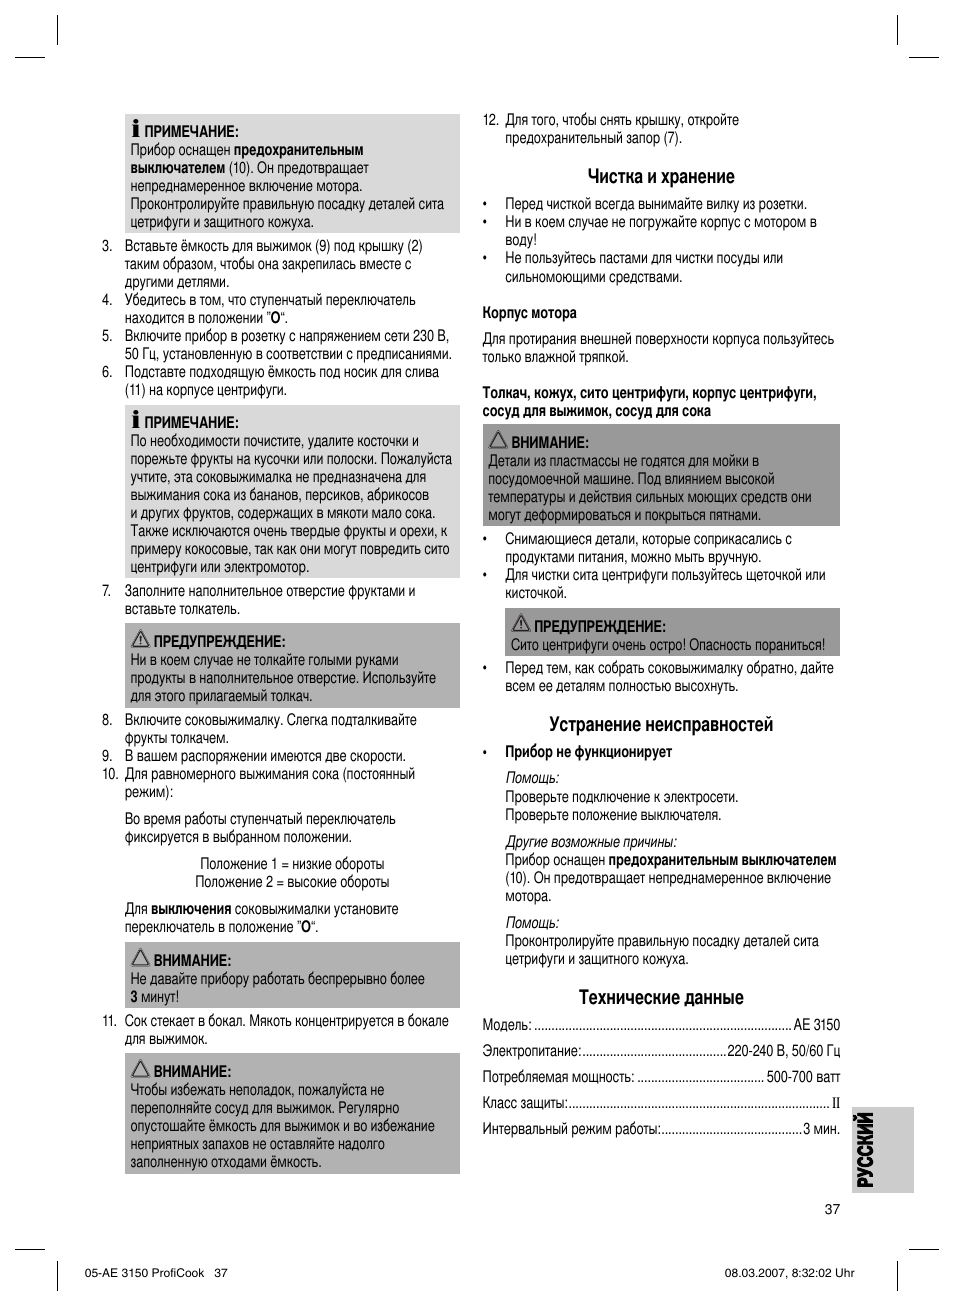 CLATRONIC AE 3150 PROFI COOK User Manual | Page 37 / 42